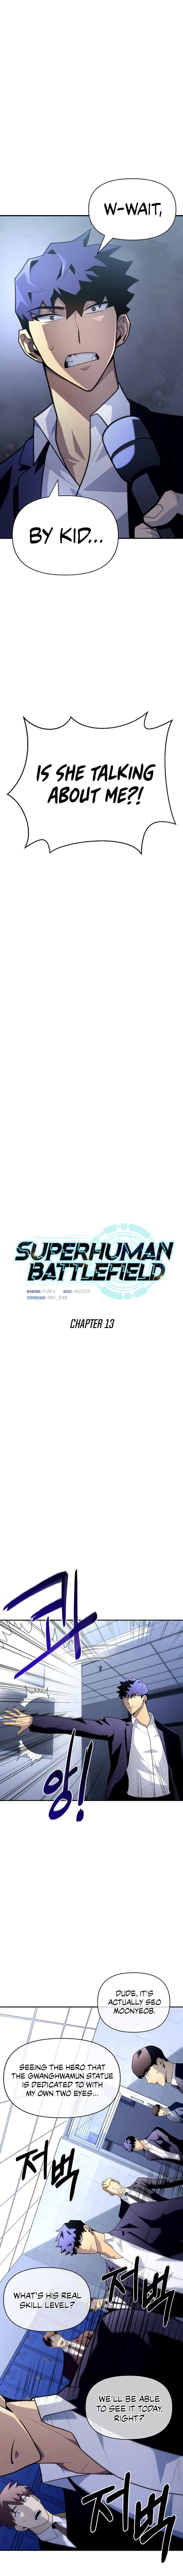 Superhuman Battlefield - Chapter 13 Page 4